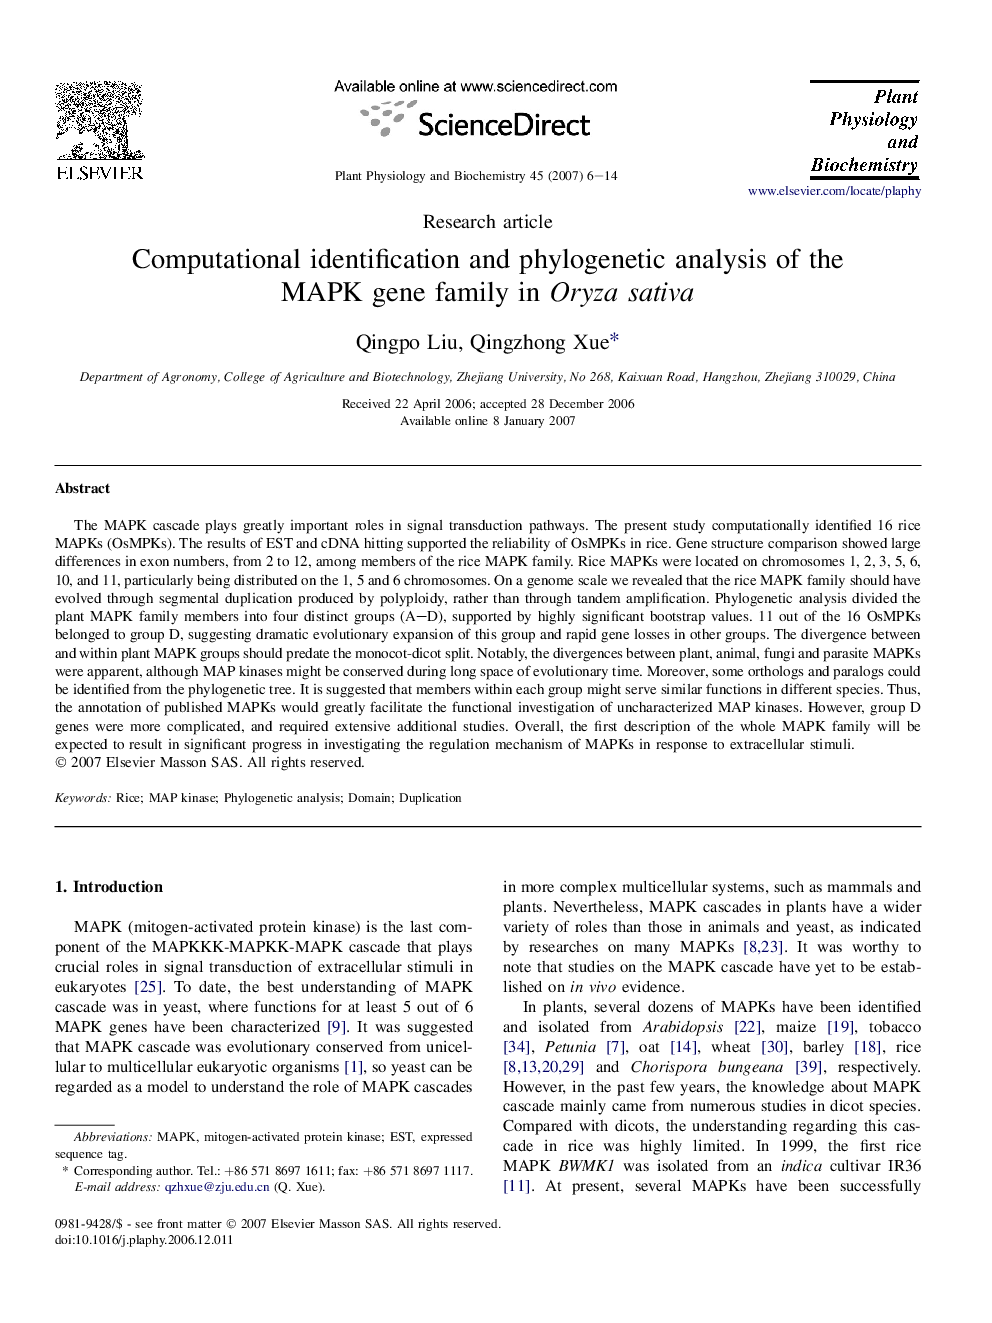 Computational identification and phylogenetic analysis of the MAPK gene family in Oryza sativa